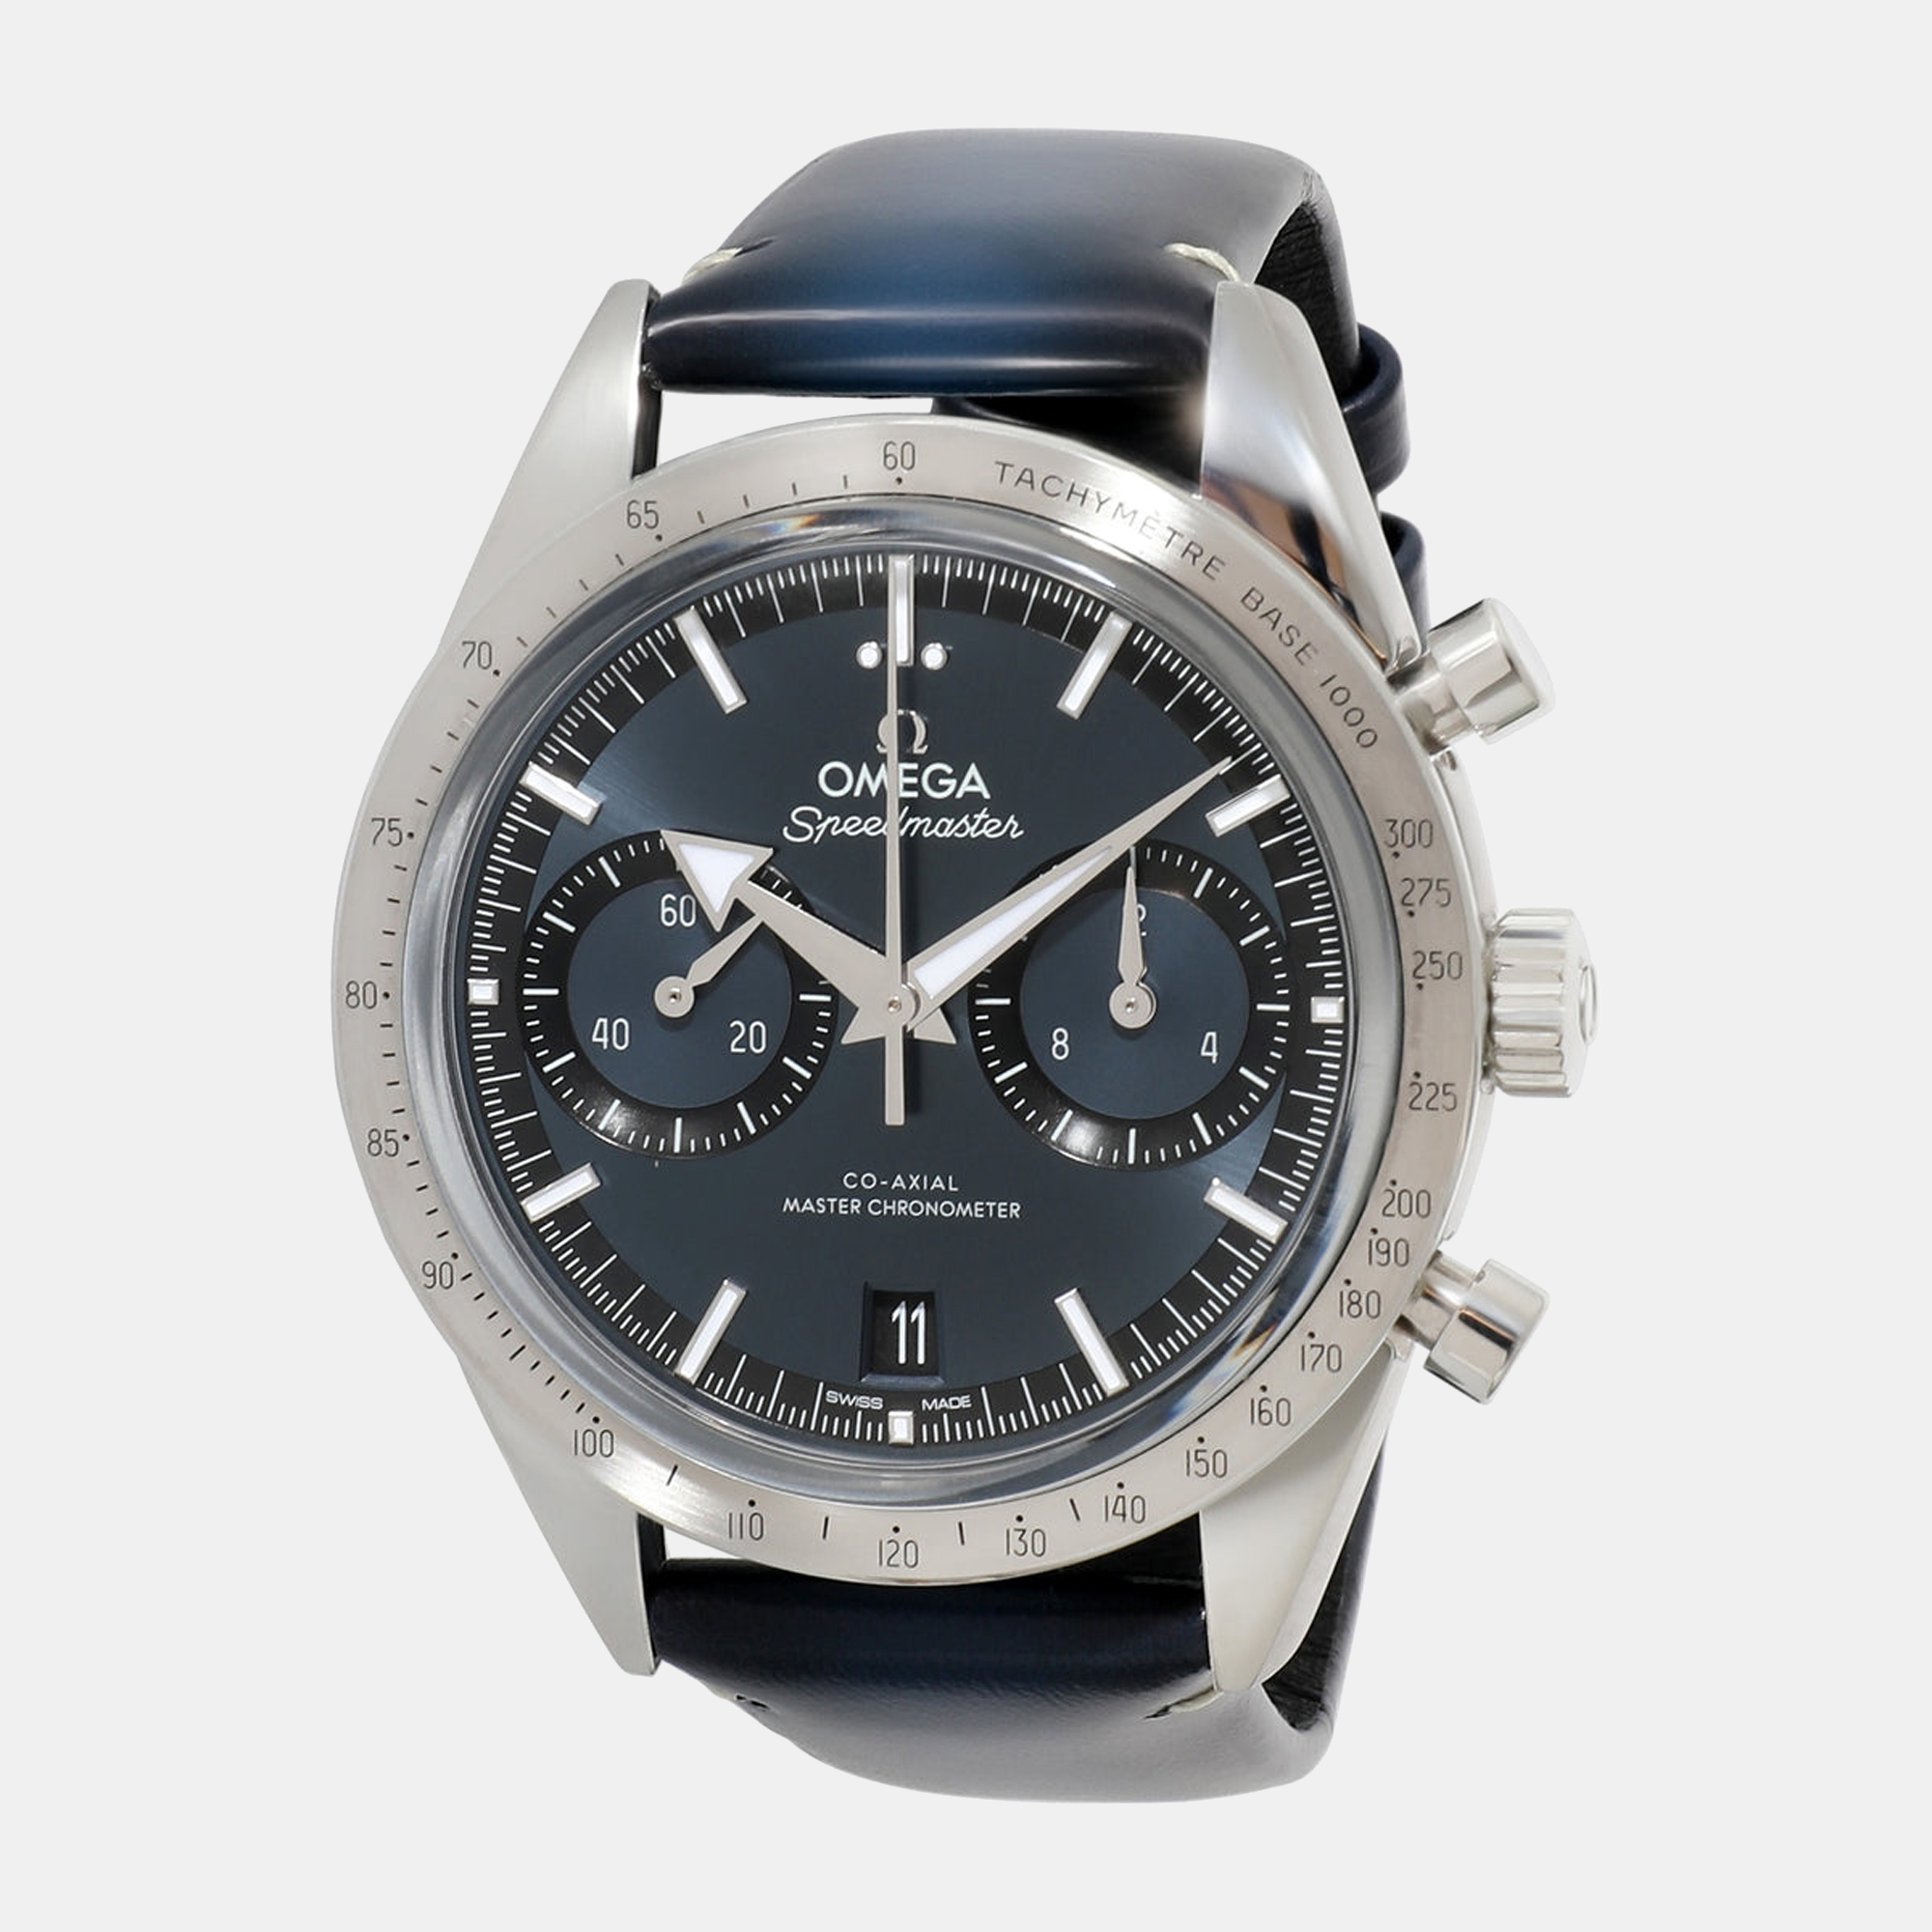 Omega blue stainless steel speedmaster 332.12.41.51.03.001 men's wristwatch 40.5 mm